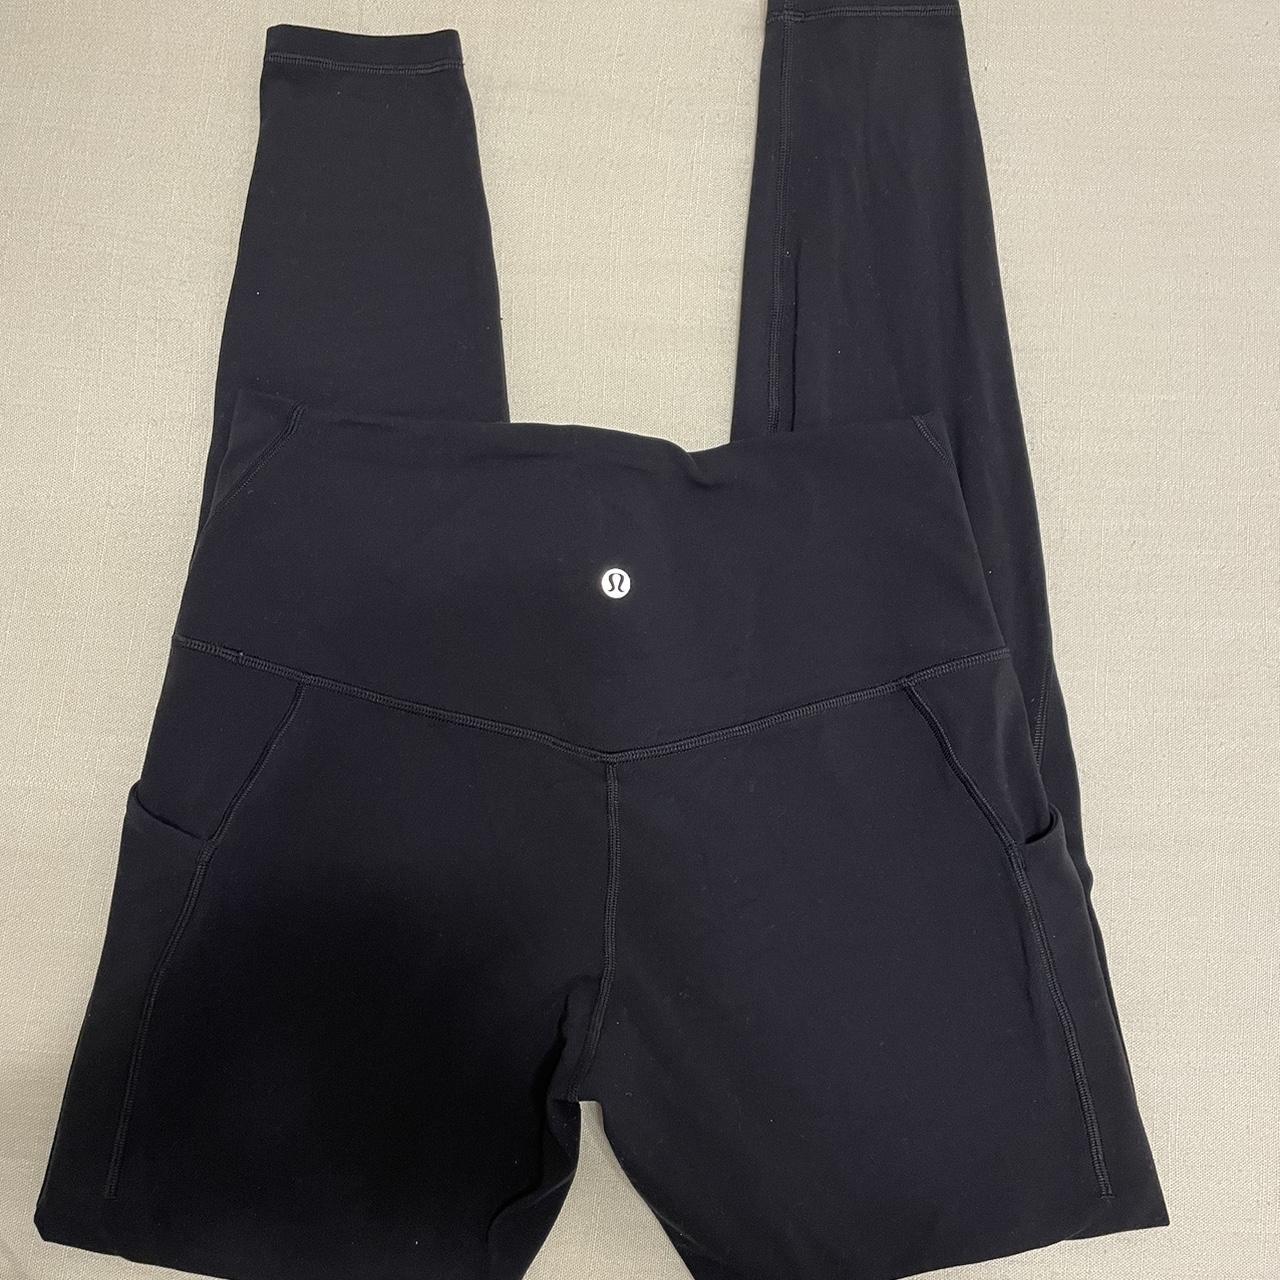 Lululemon align leggings with pockets, size 10